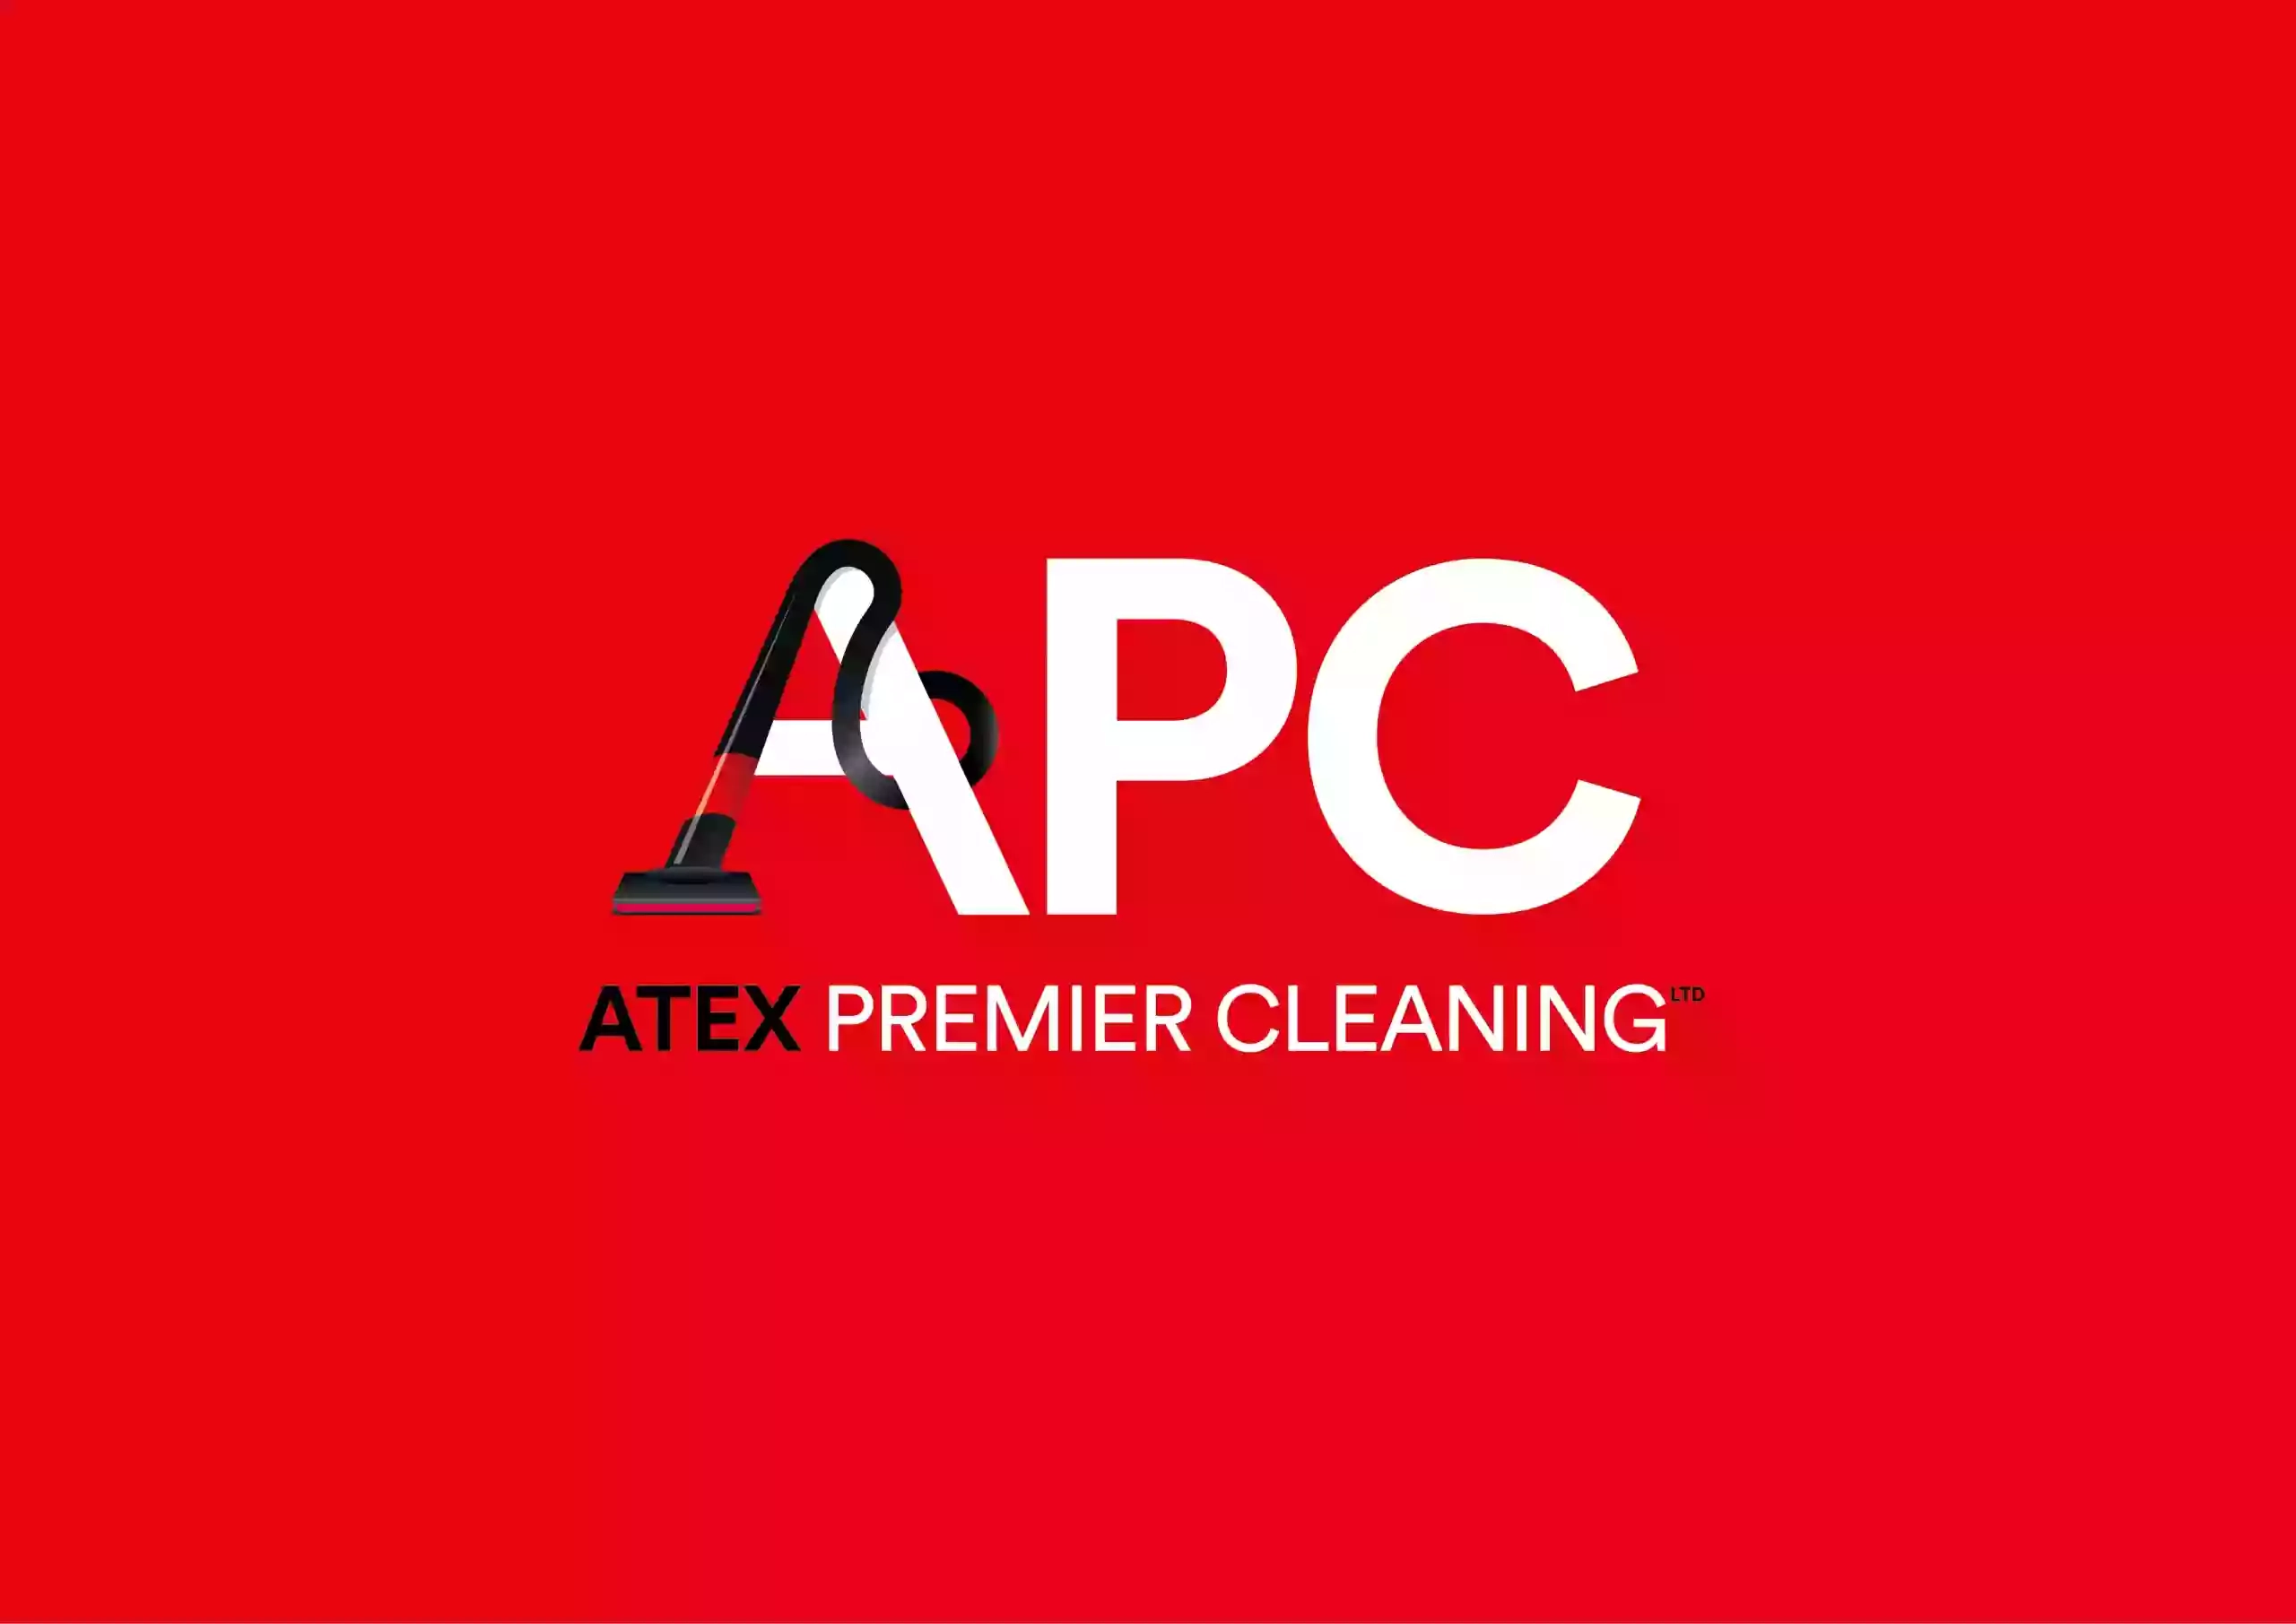 ATEX Premier Cleaning Ltd